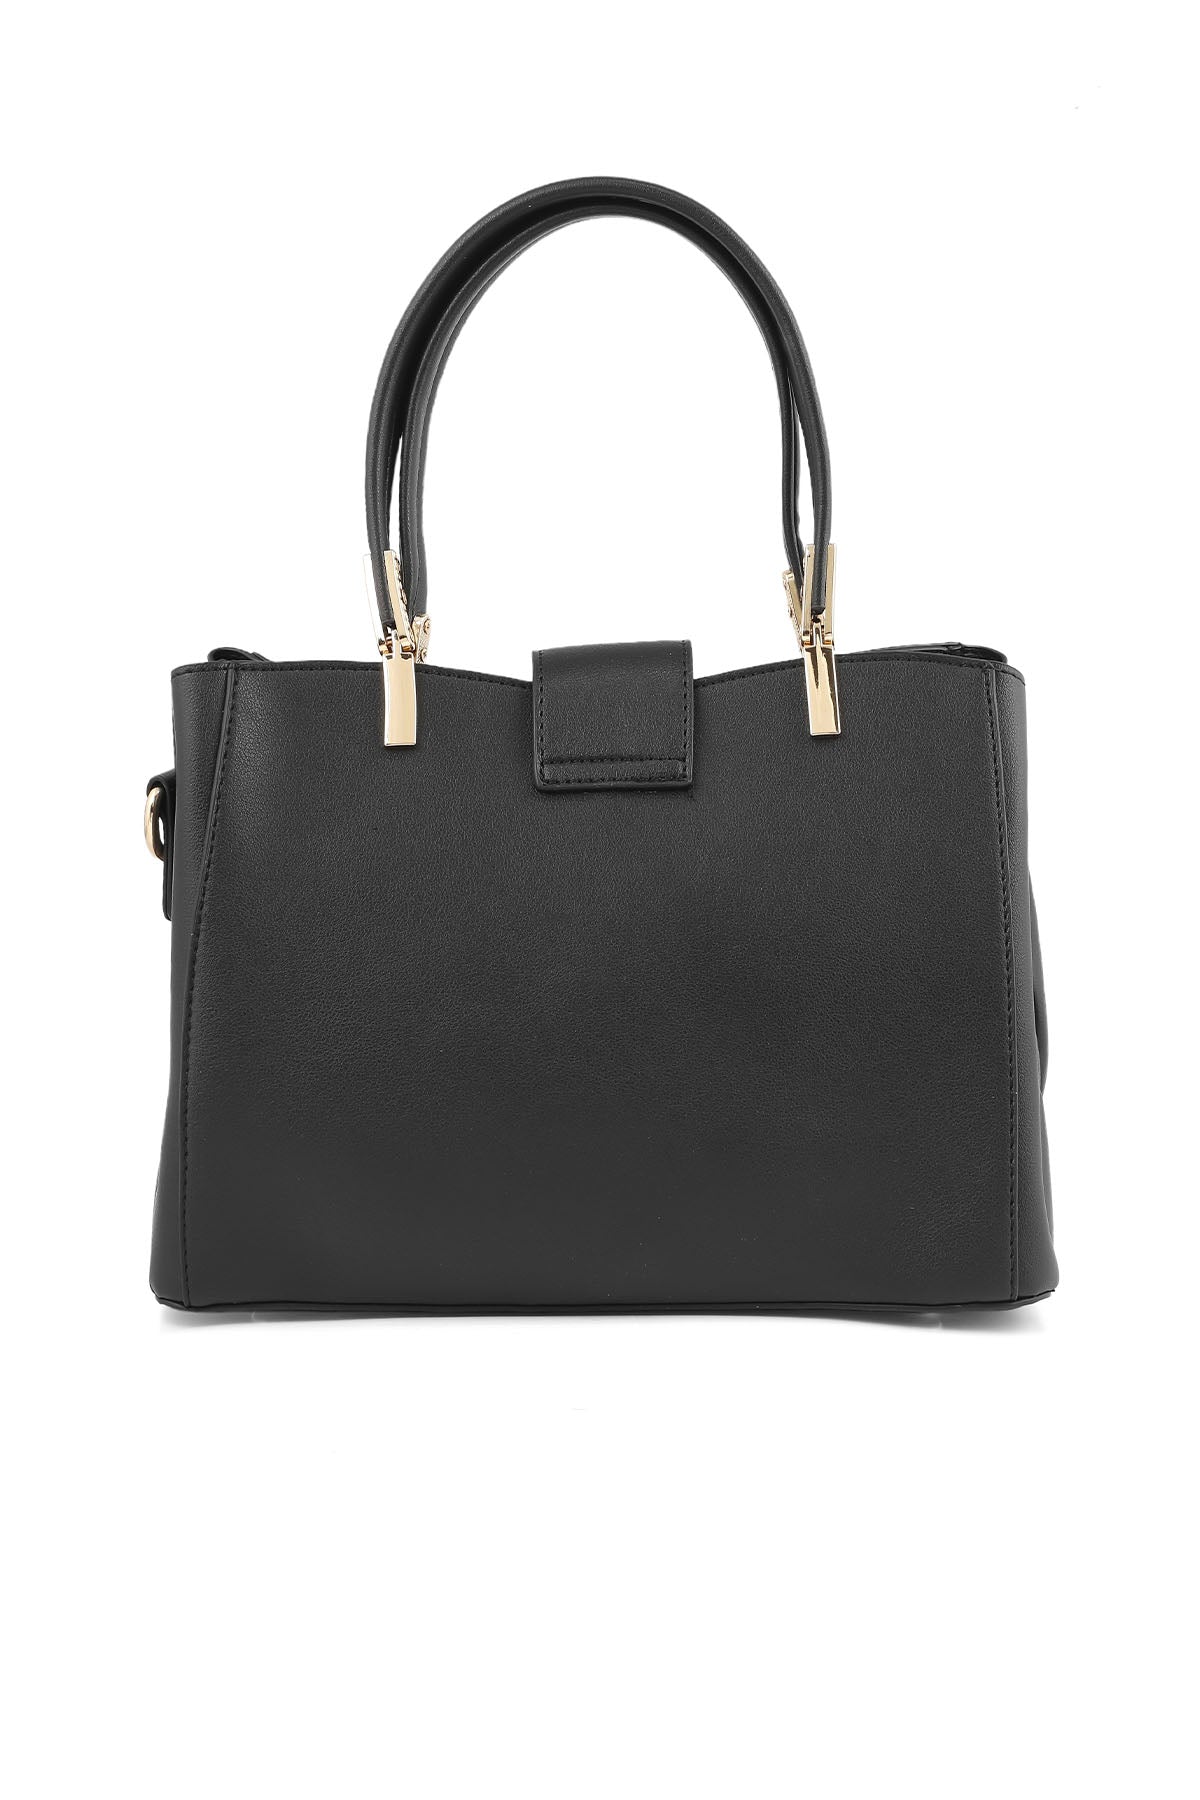 Formal Tote Hand Bags B15057-Black